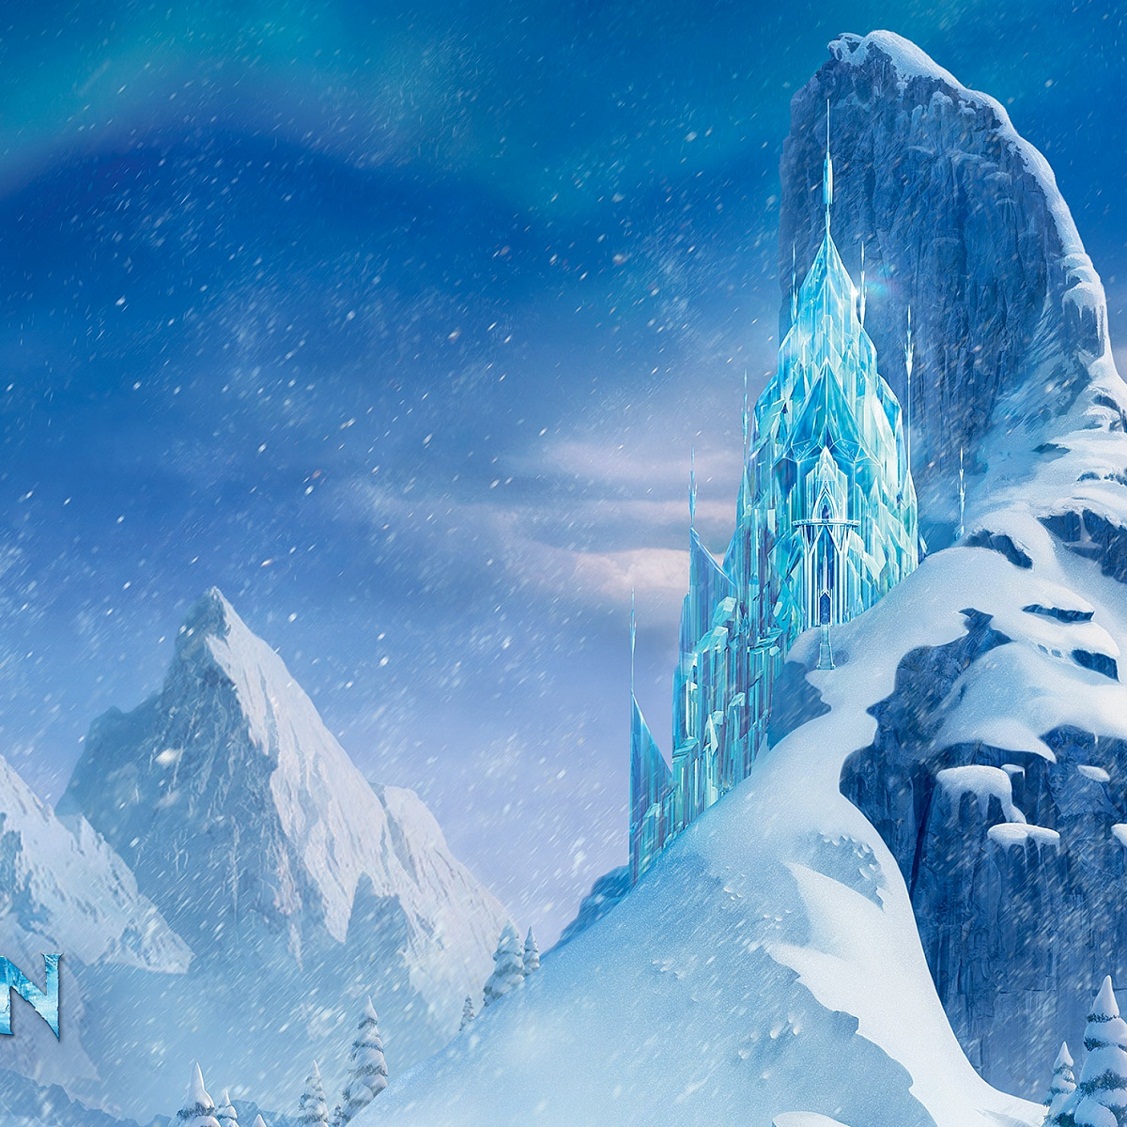 Disney Frozen Wallpaper for Tablets - WallpaperSafari